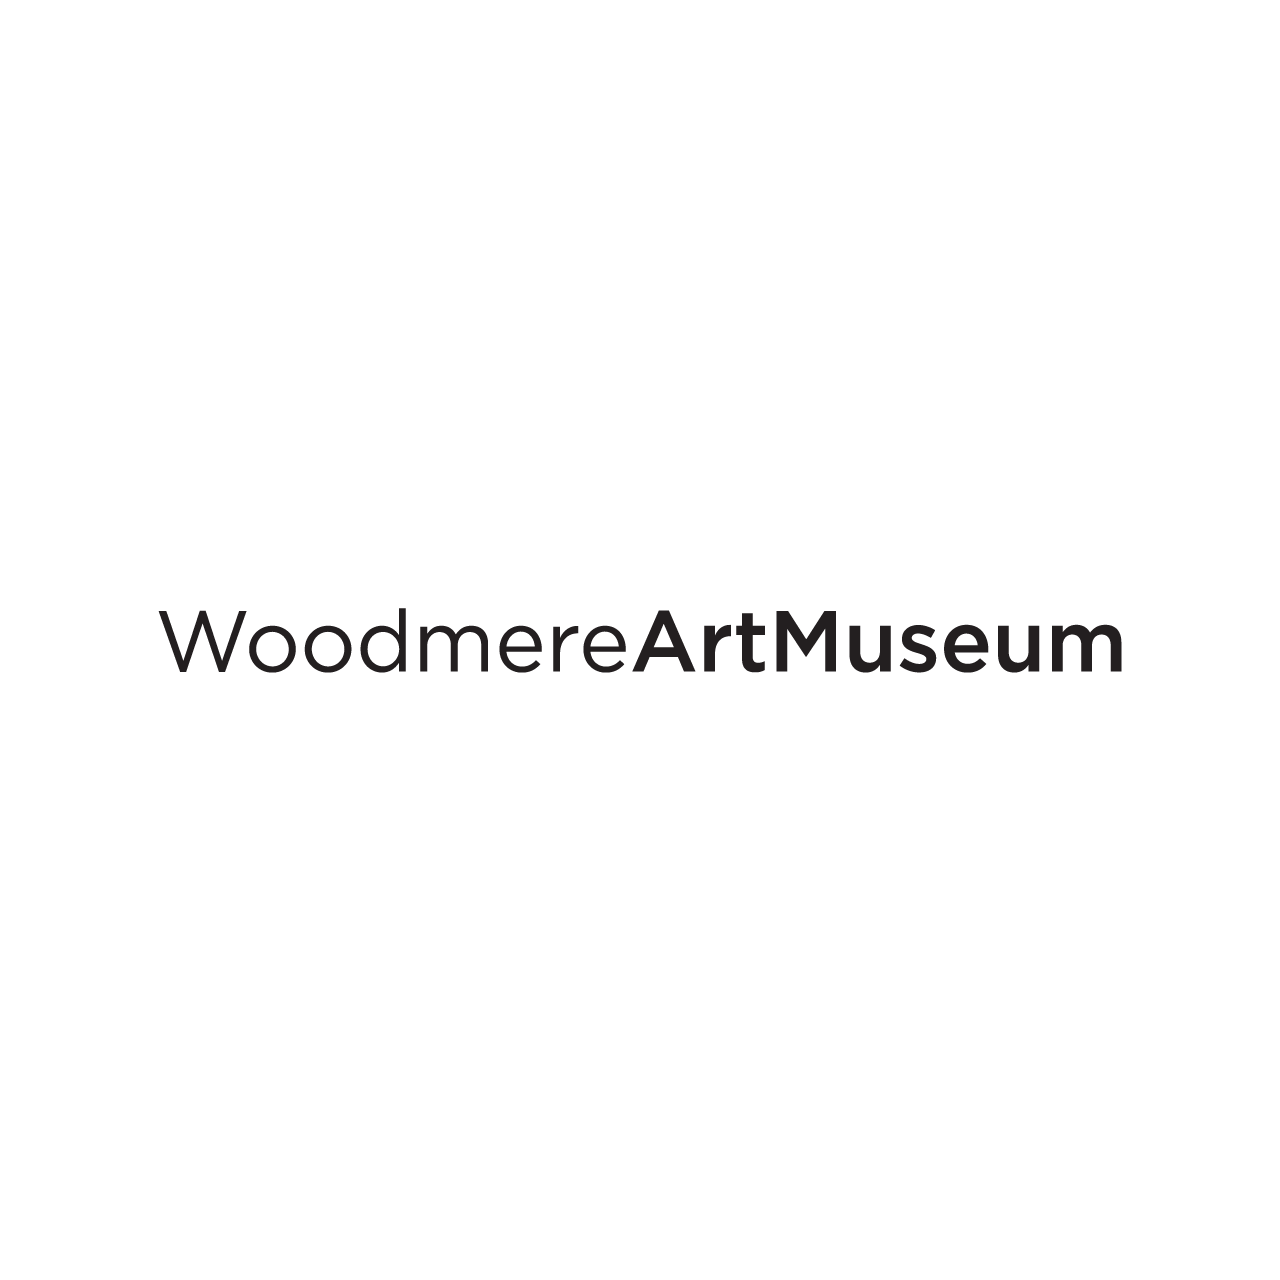 Woodmere Art Museum